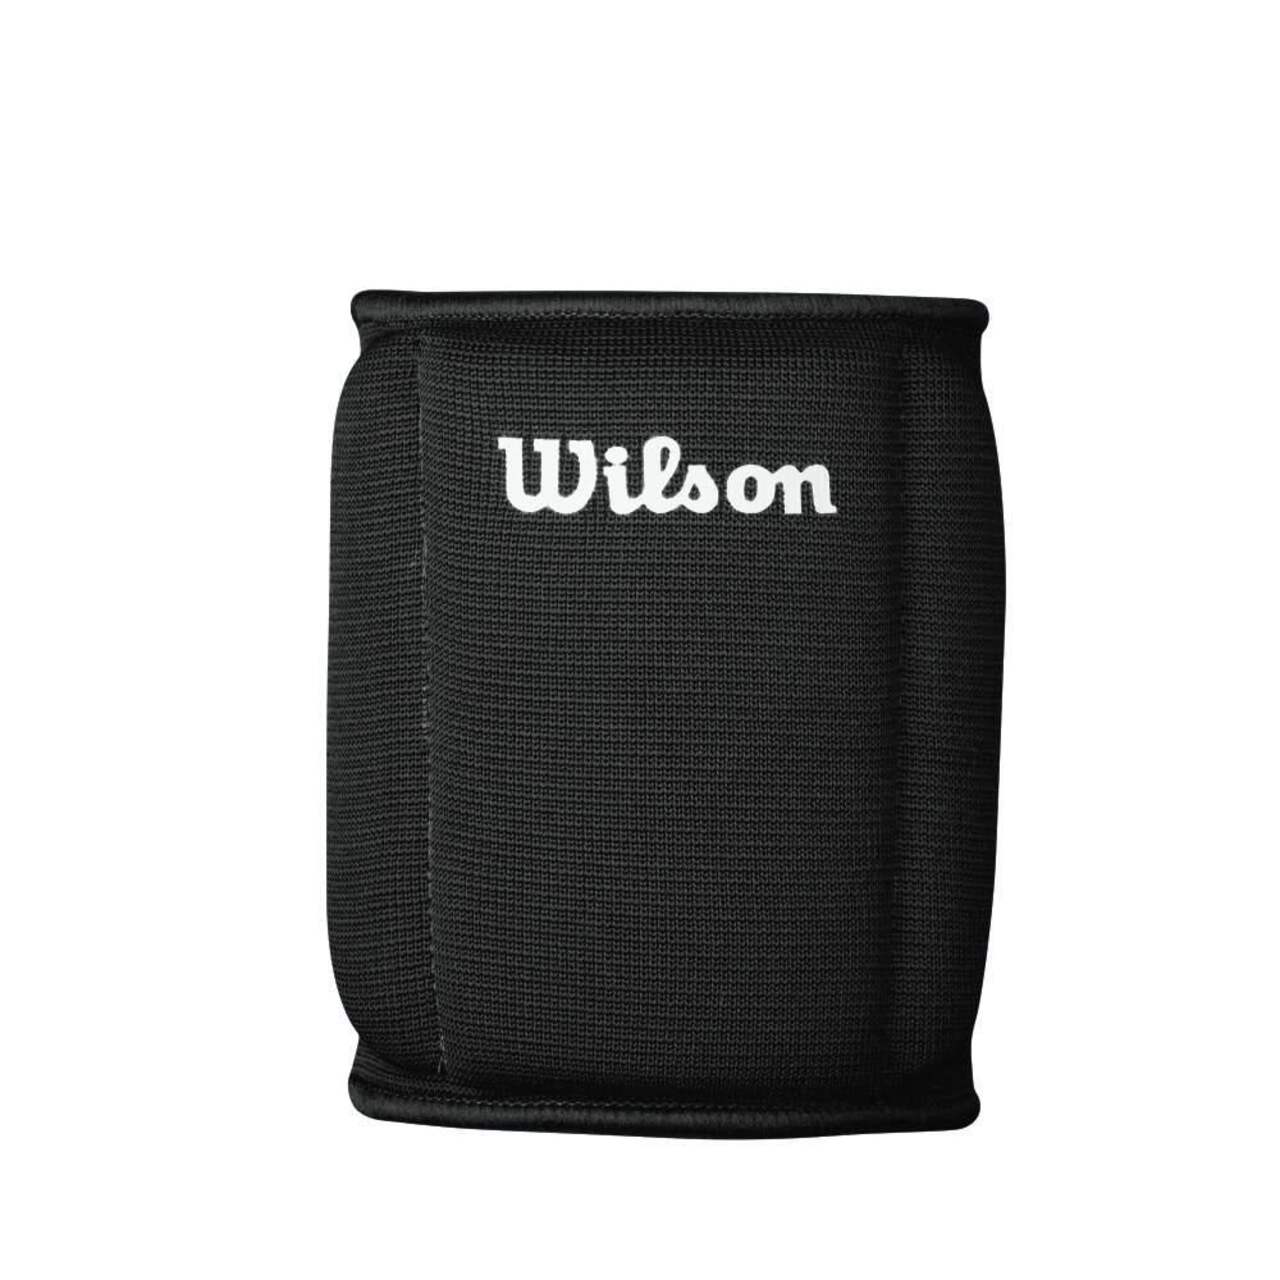 Wilson Deluxe Reversible Volleyball Knee Pads